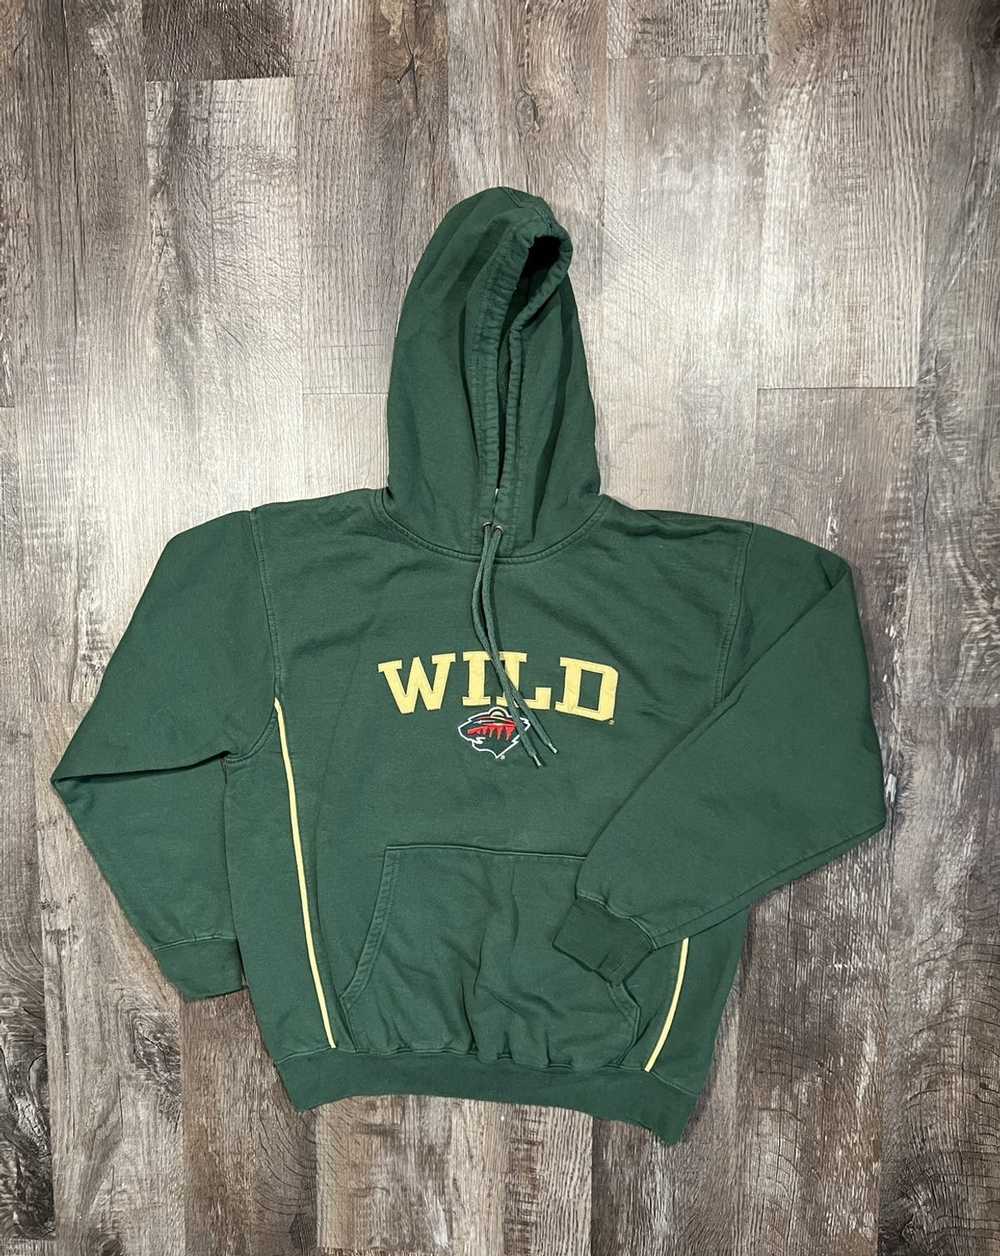 Retro Old Time Hockey Minnesota Wild full zip jacket sweatshirt